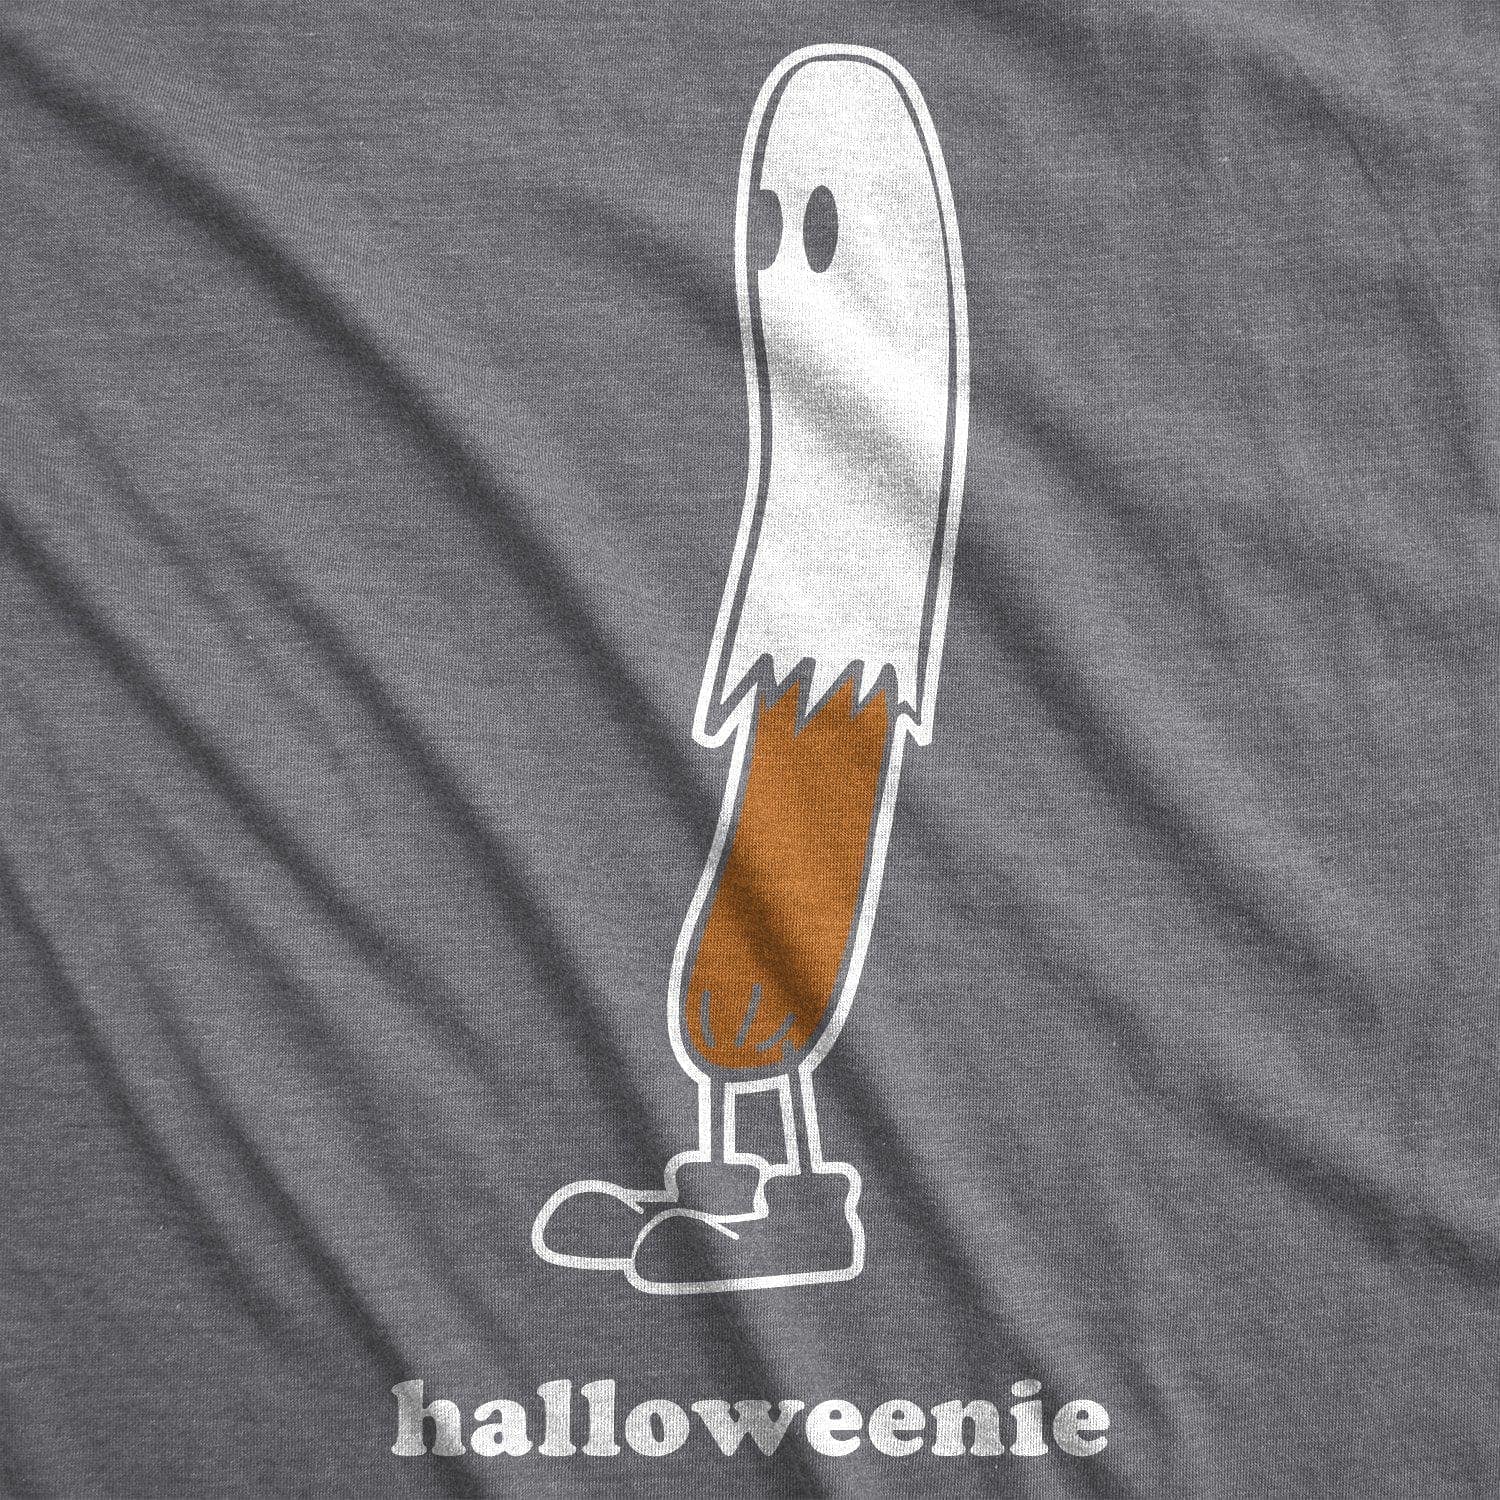 Halloweenie Men's Tshirt - Crazy Dog T-Shirts